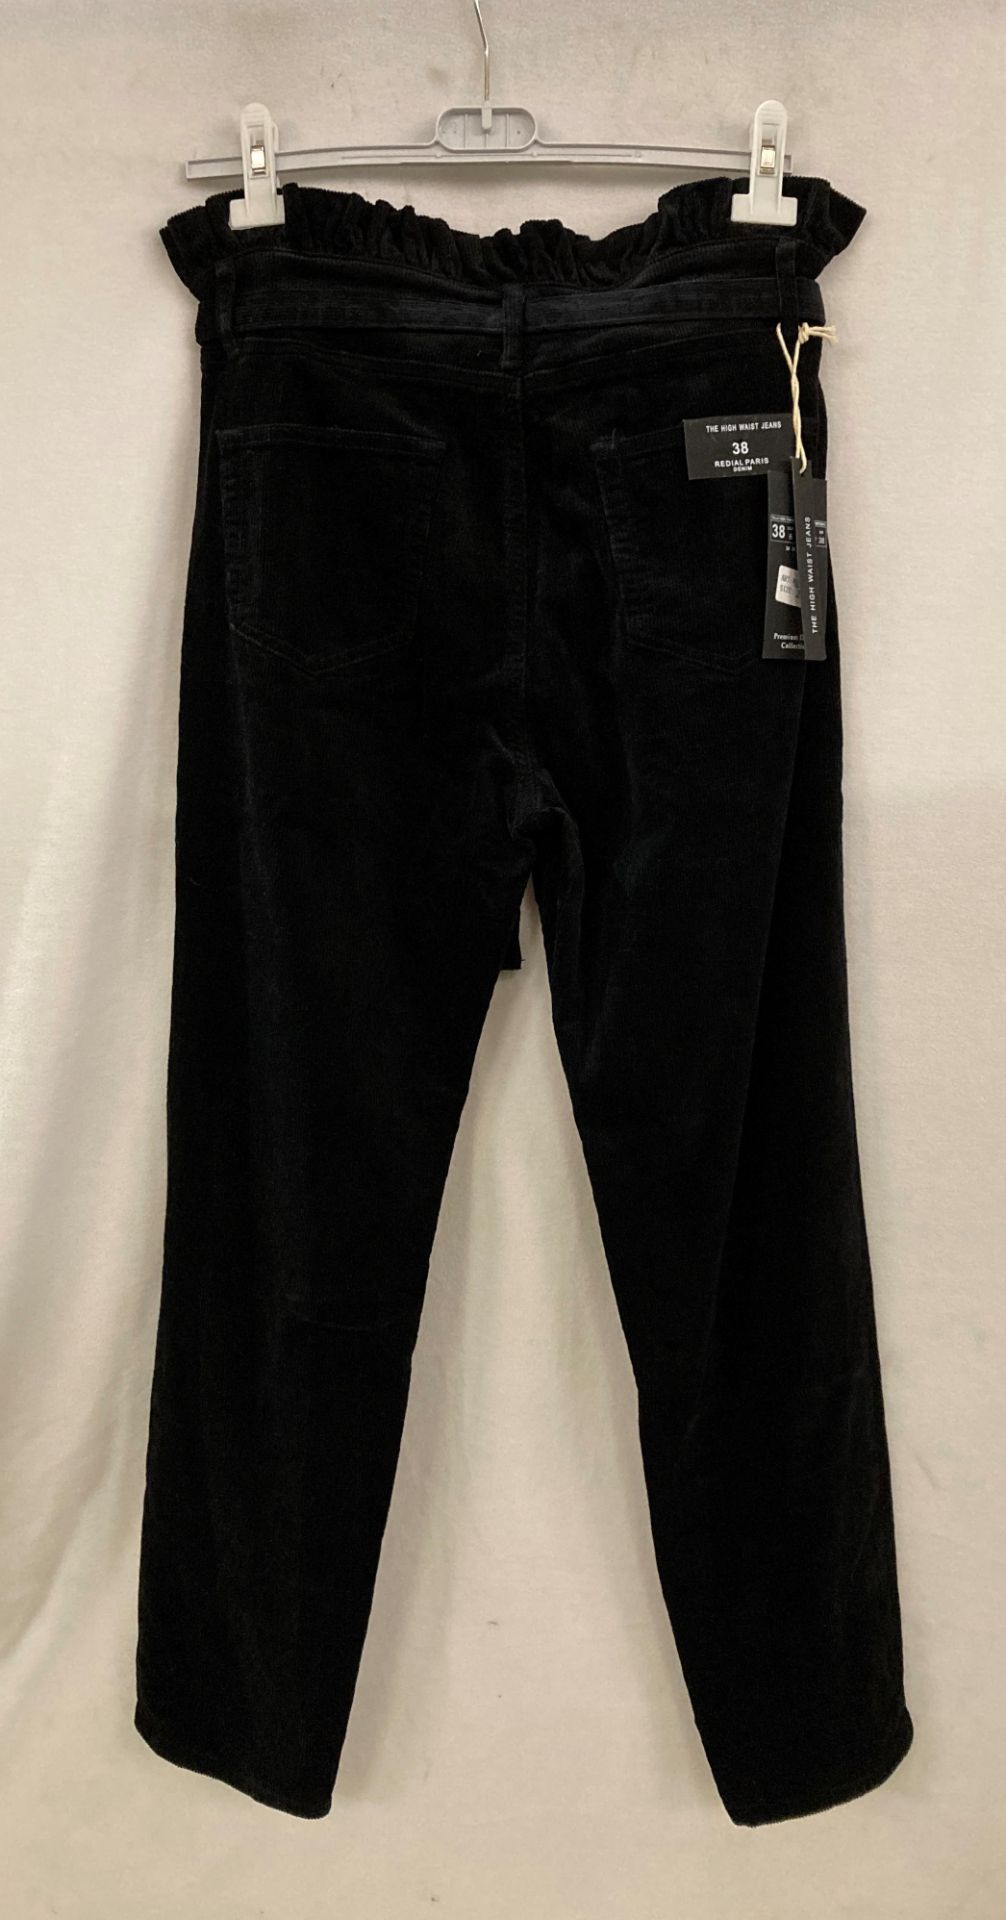 10 x Pro Redial Paris black corduroy high waist jeans, sizes 6, 8, 10, - Image 2 of 2